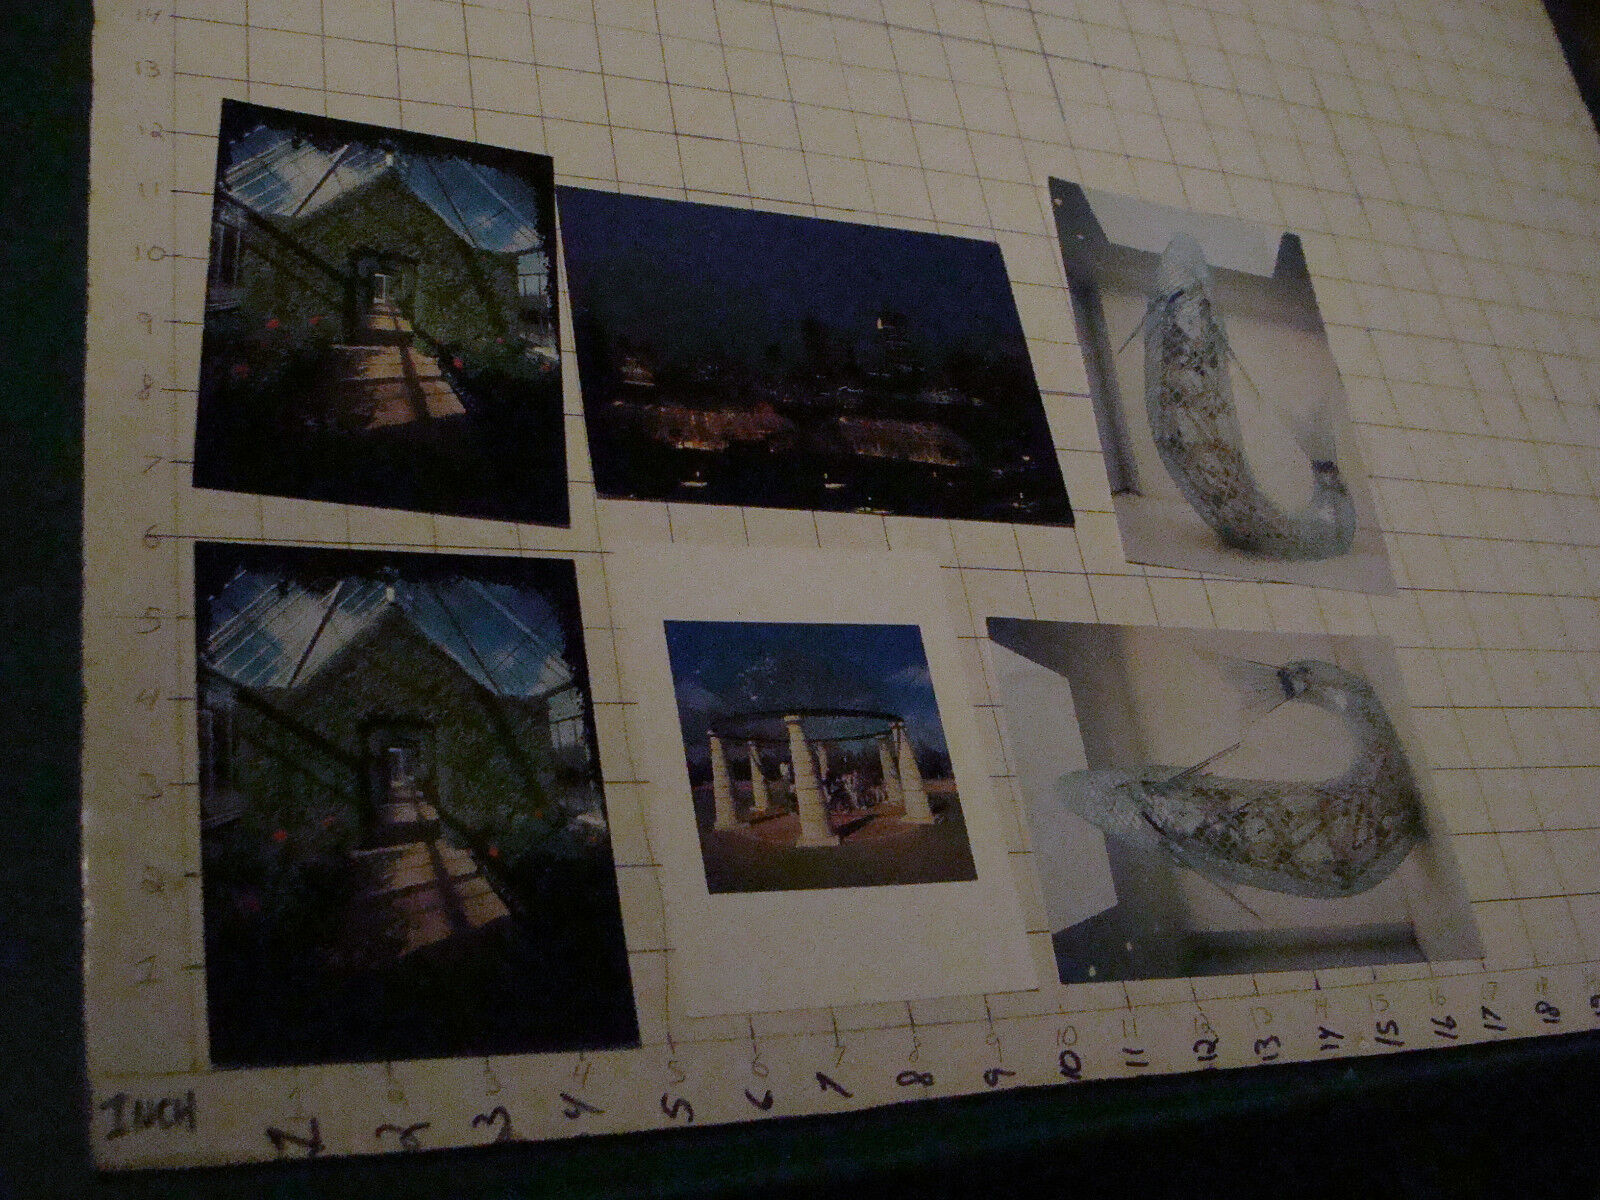 Postcards: MINNEAPOLIS Sculpture garden, FRANK GEHRY --6 cards in all unused